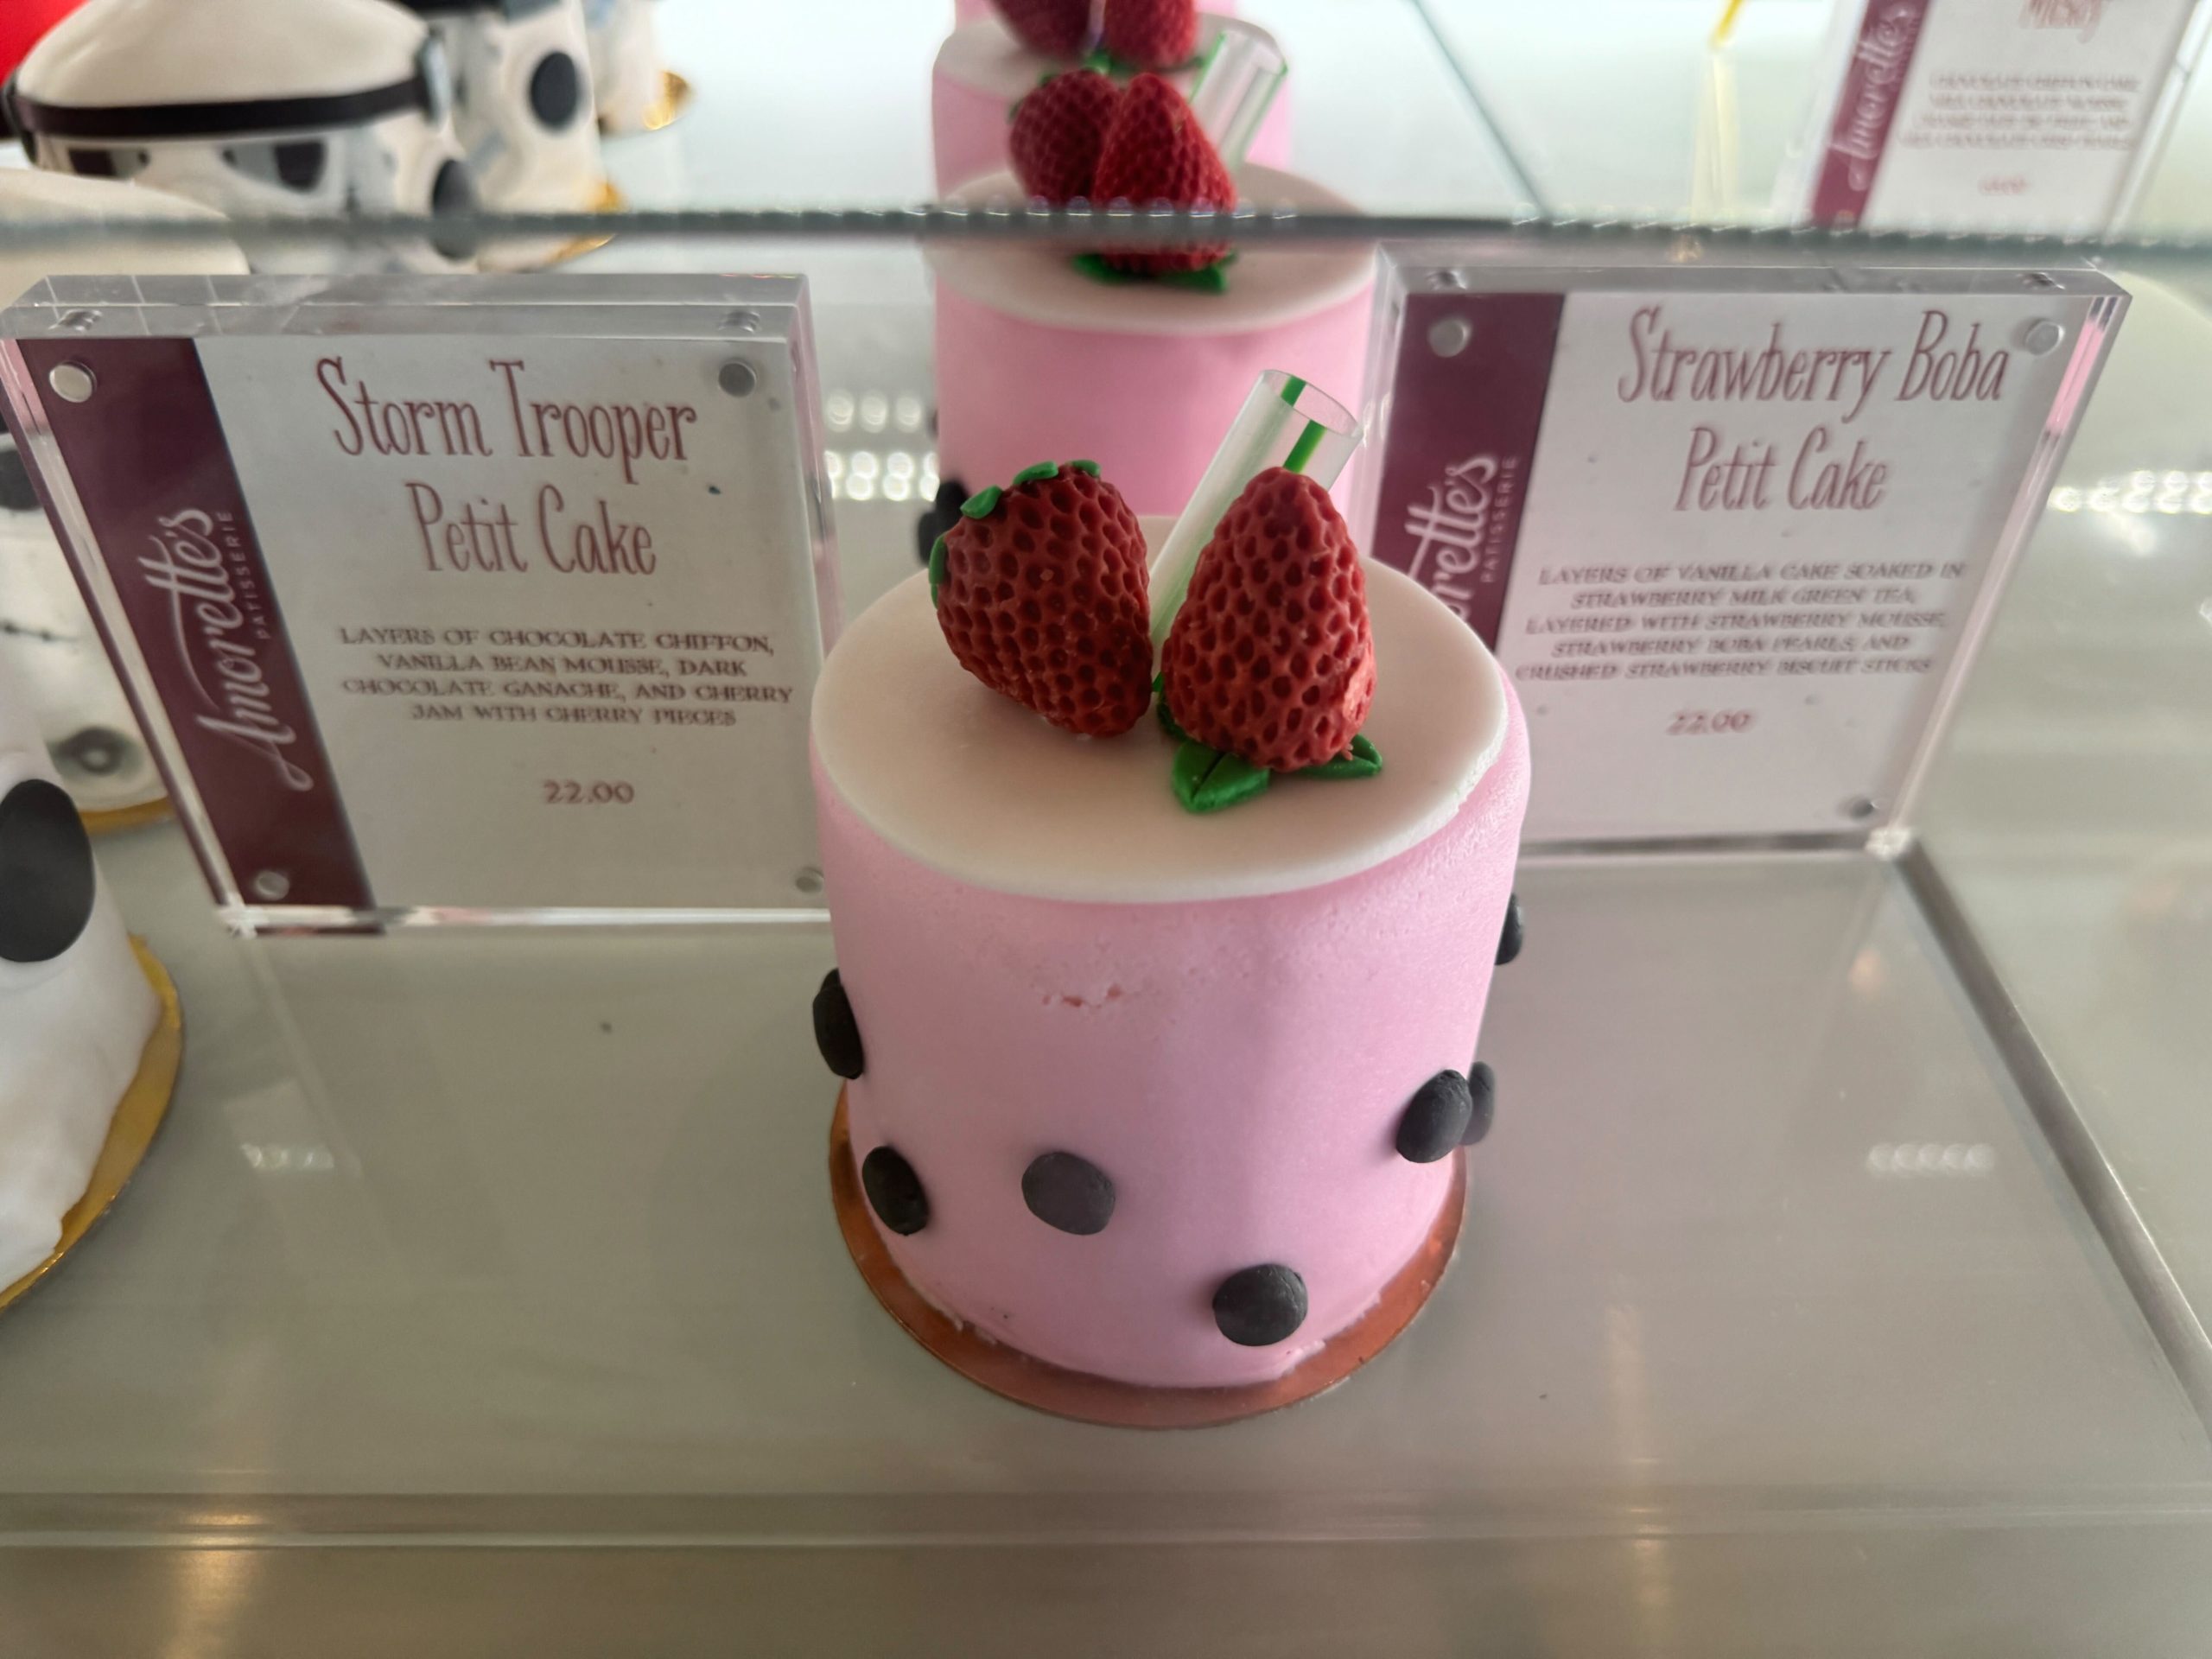 Strawberry Boba Petit Cake